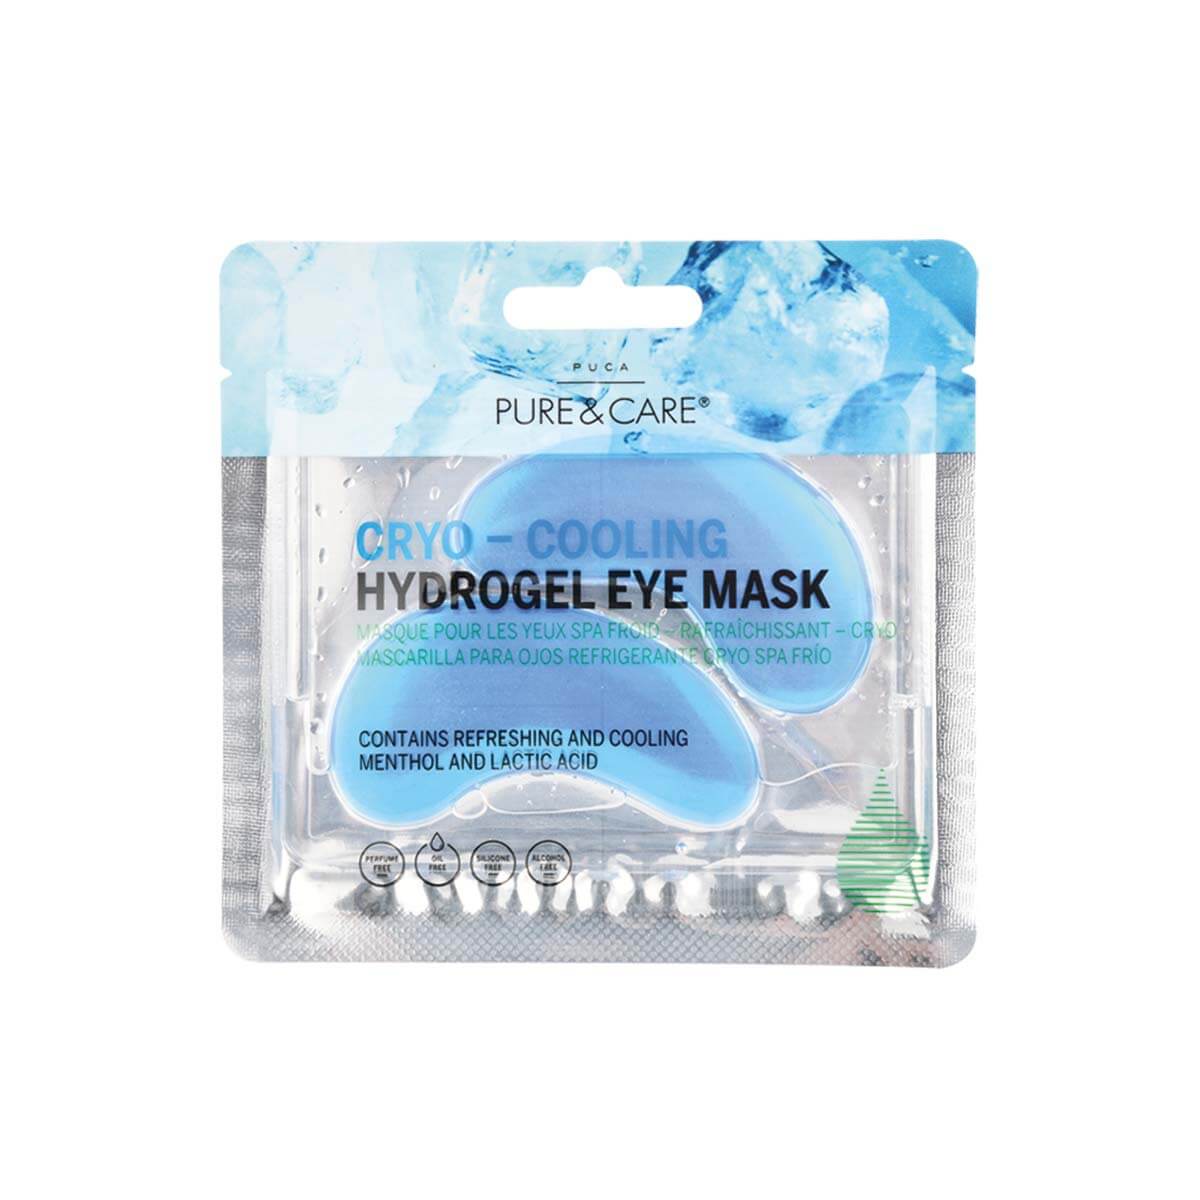 Hydrogel Eye Mask - CRYO Cooling I PUCA - PURE & CARE